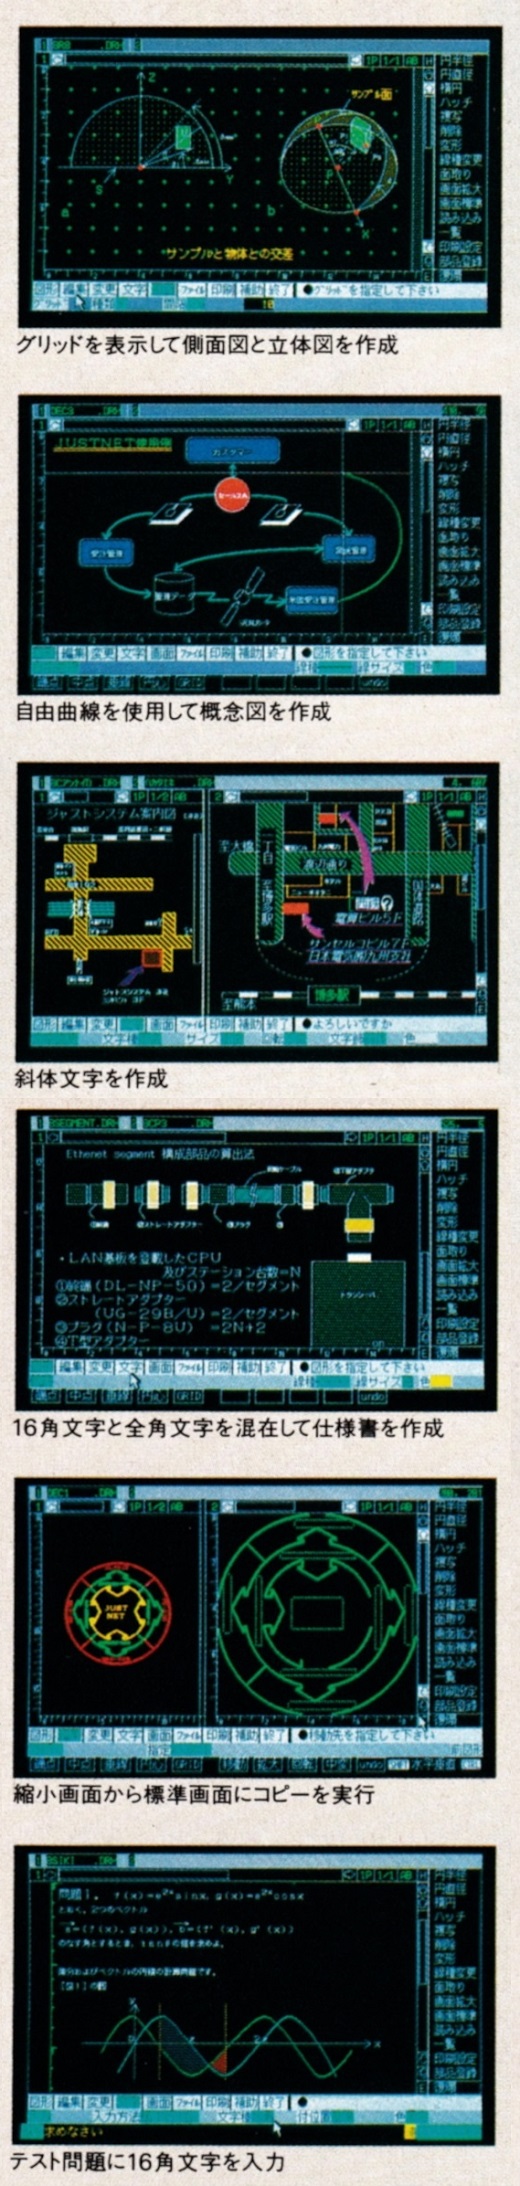 ASCII1987(02)a09花子3_W520.jpg